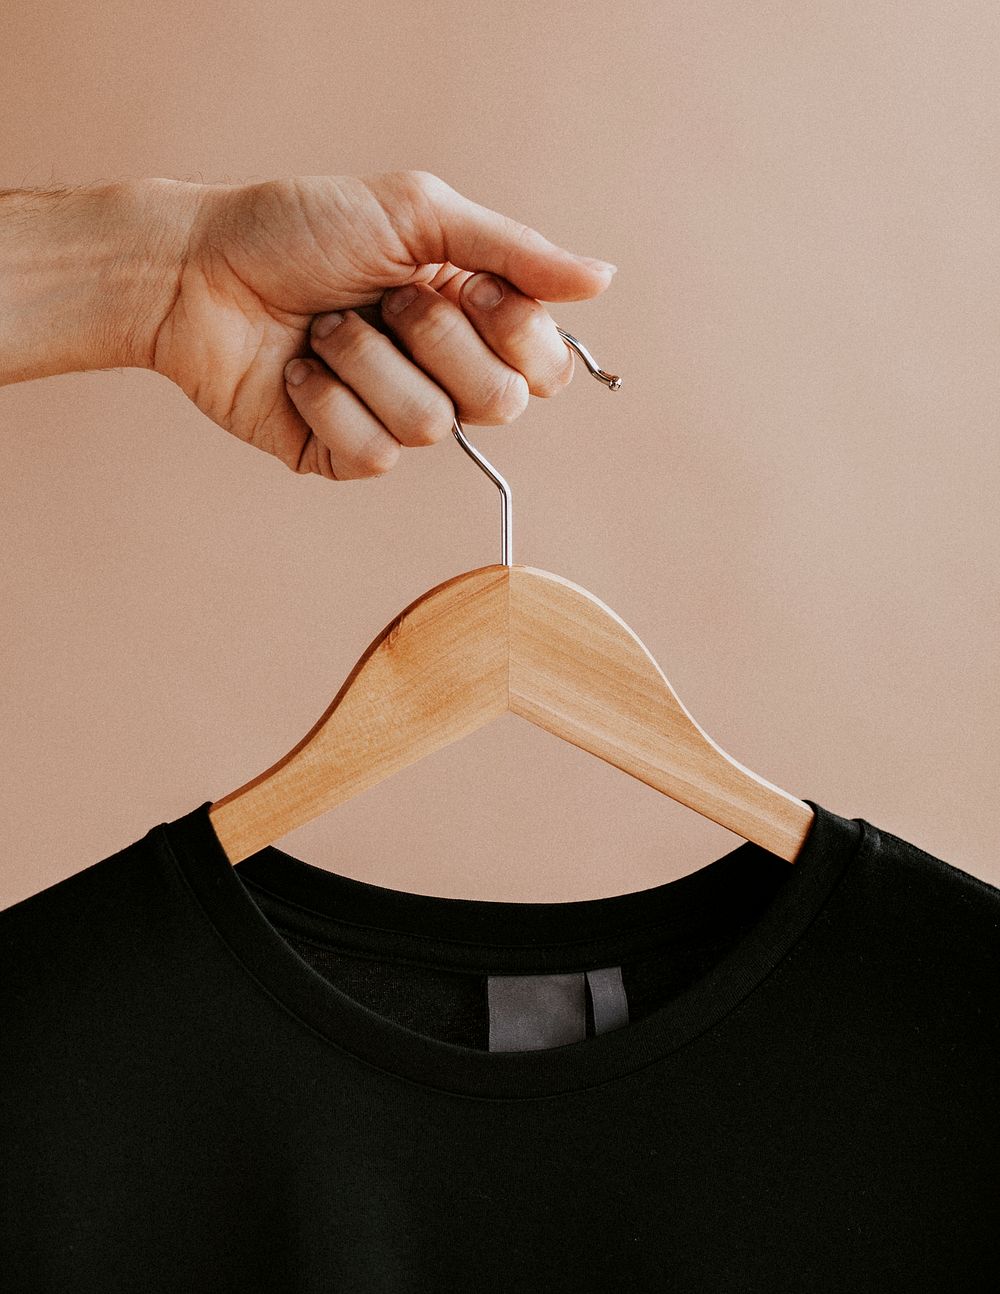 Hands holding a black t-shirt in a hanger